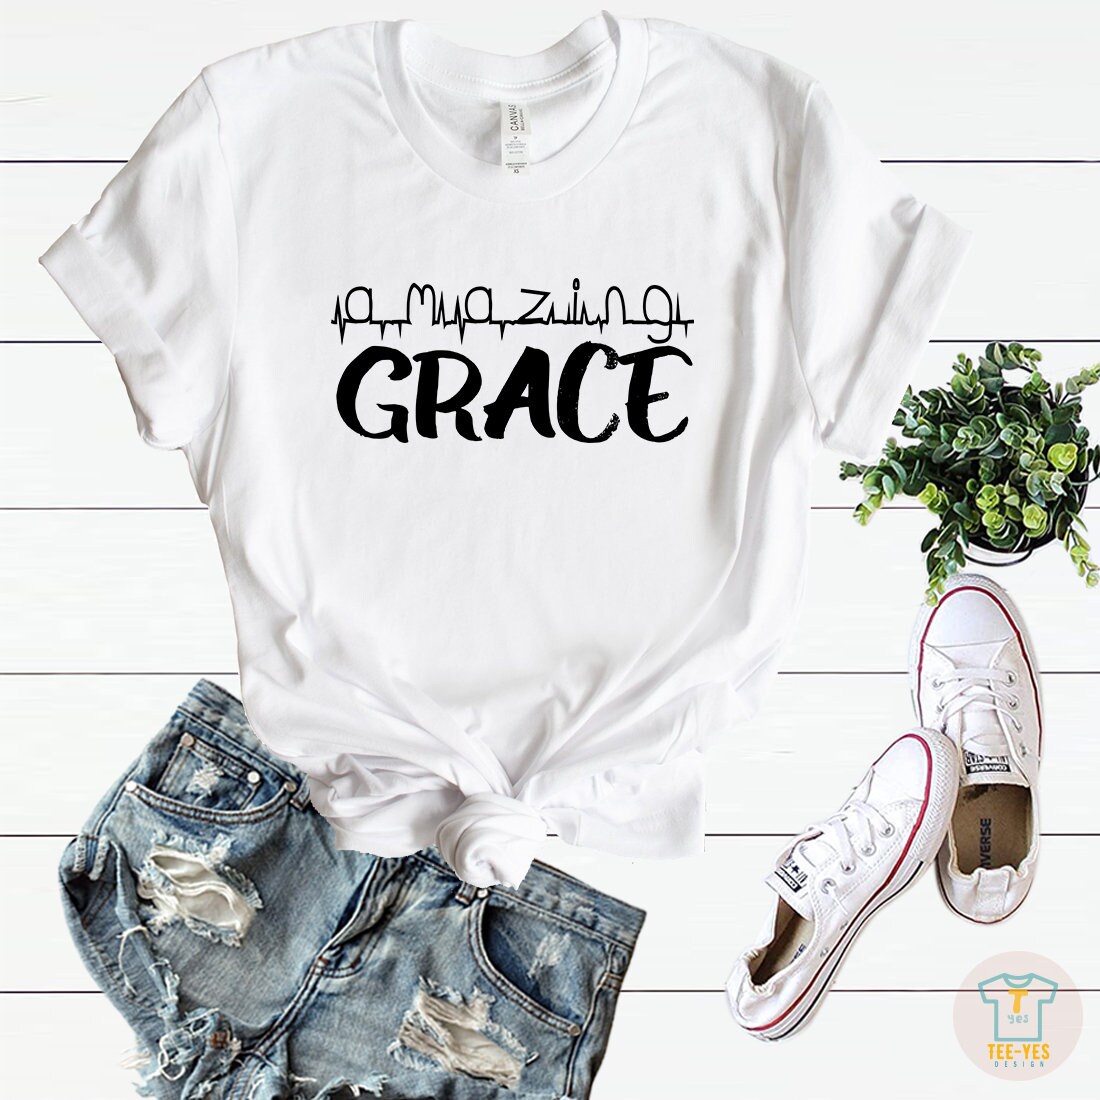 Amazing Grace Shirt, Christian Shirt, Faith Shirt, Religion Shirt ...